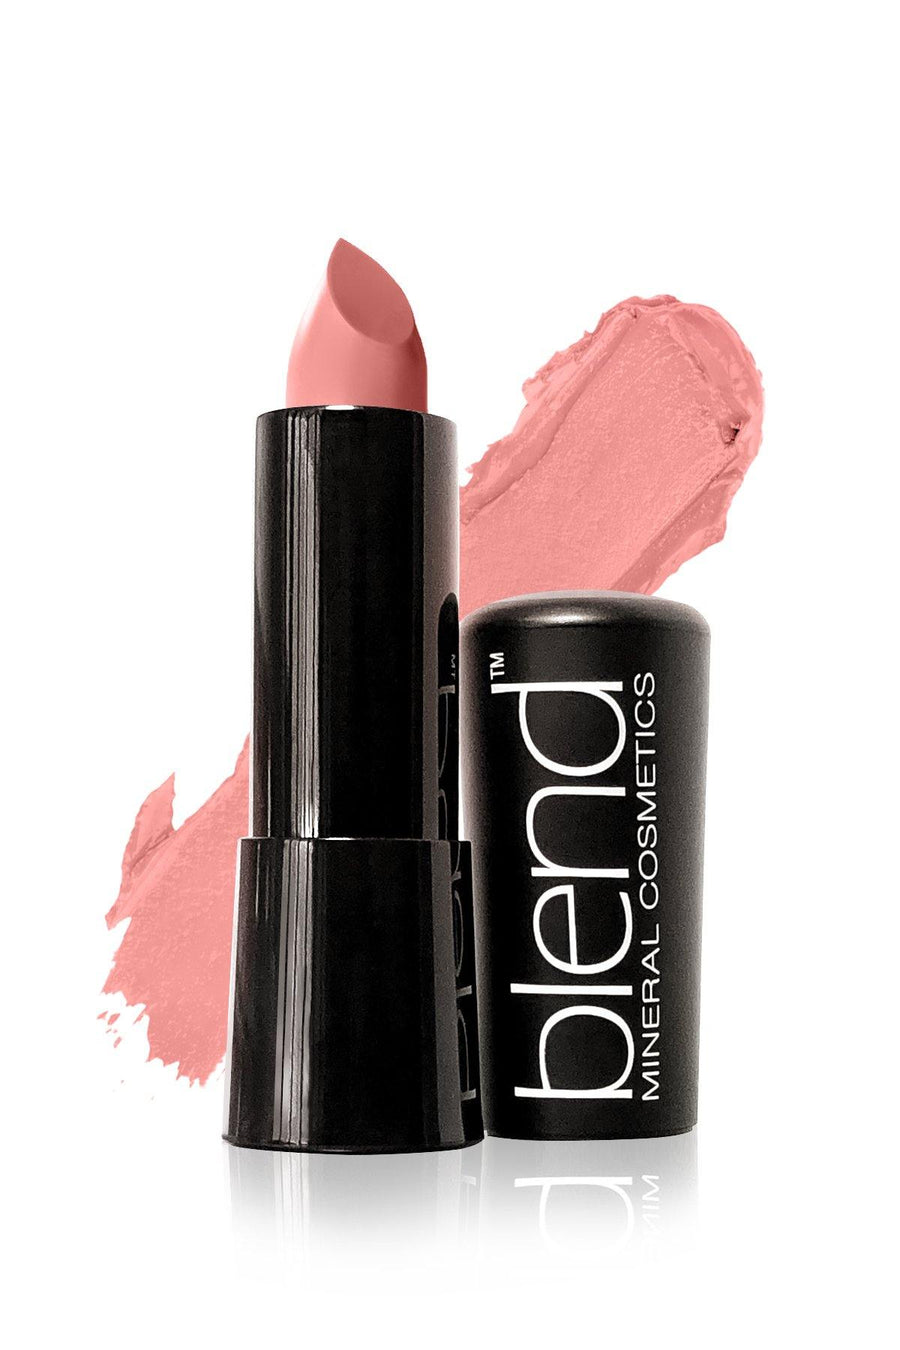 Matte Lipstick #26 - Light Coral - Blend Mineral Cosmetics